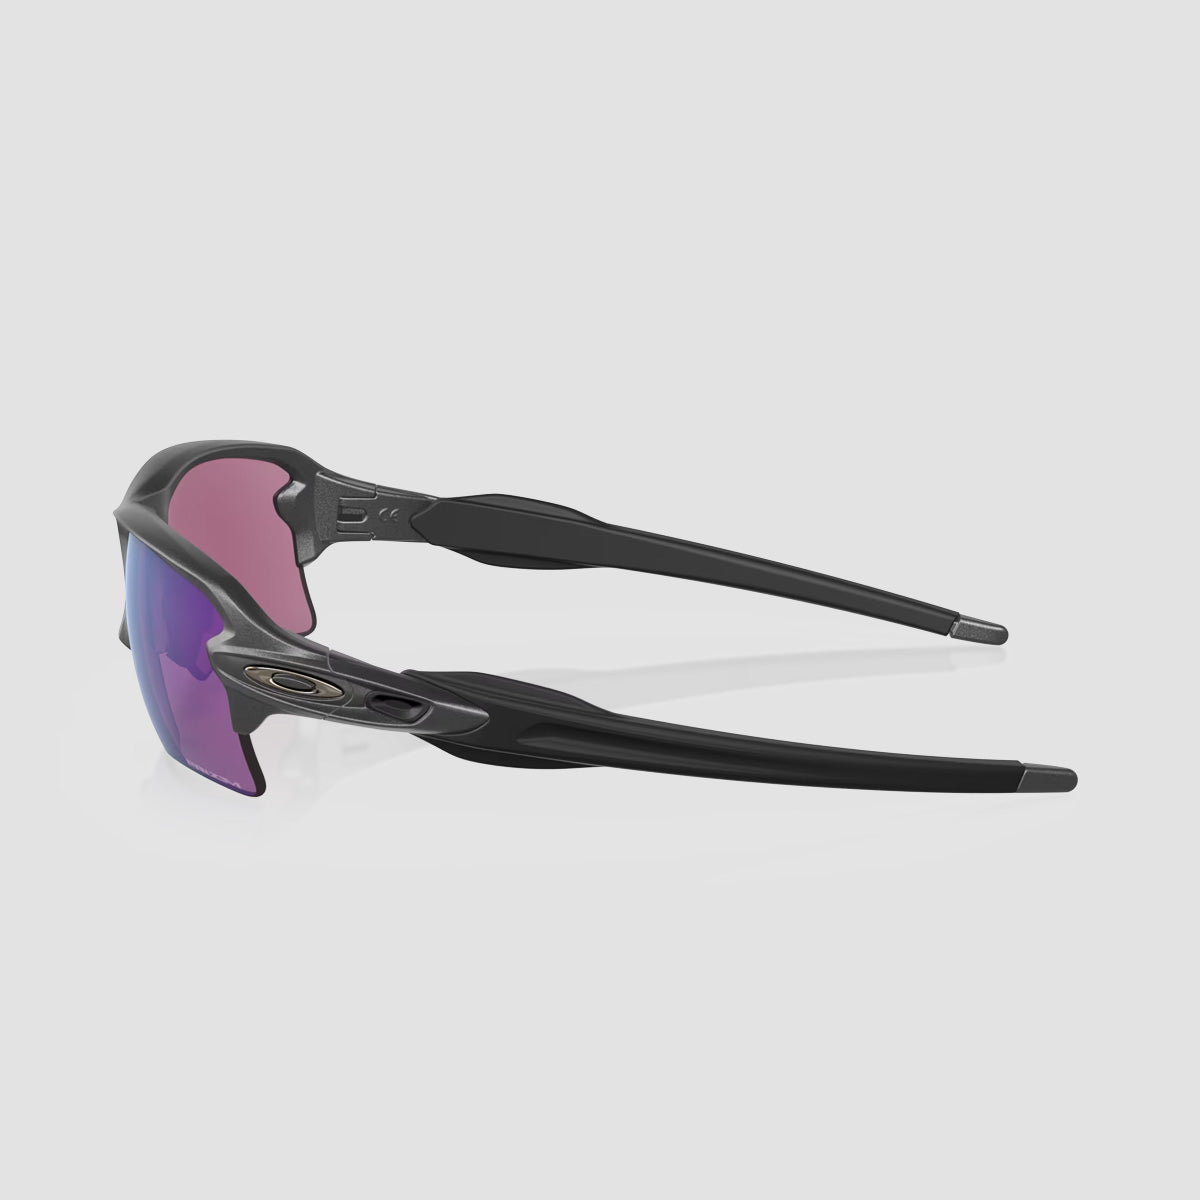 Oakley Flak 2.0 XL Sunglasses Steel/Prizm Road Jade 59S